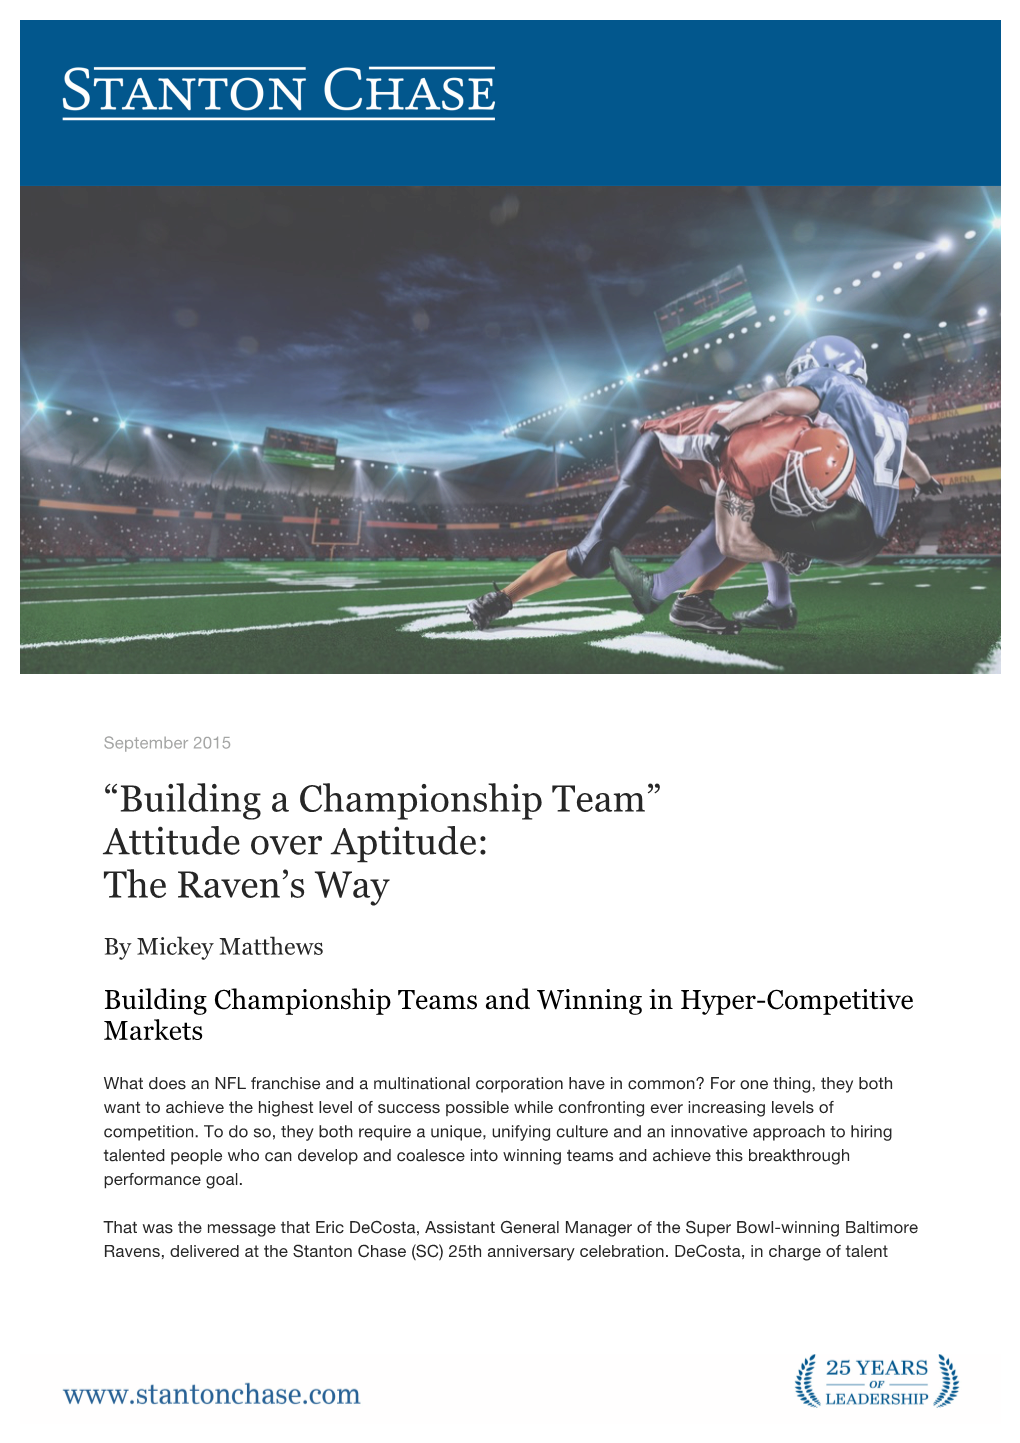 “Building a Championship Team” Attitude Over Aptitude: the Raven's